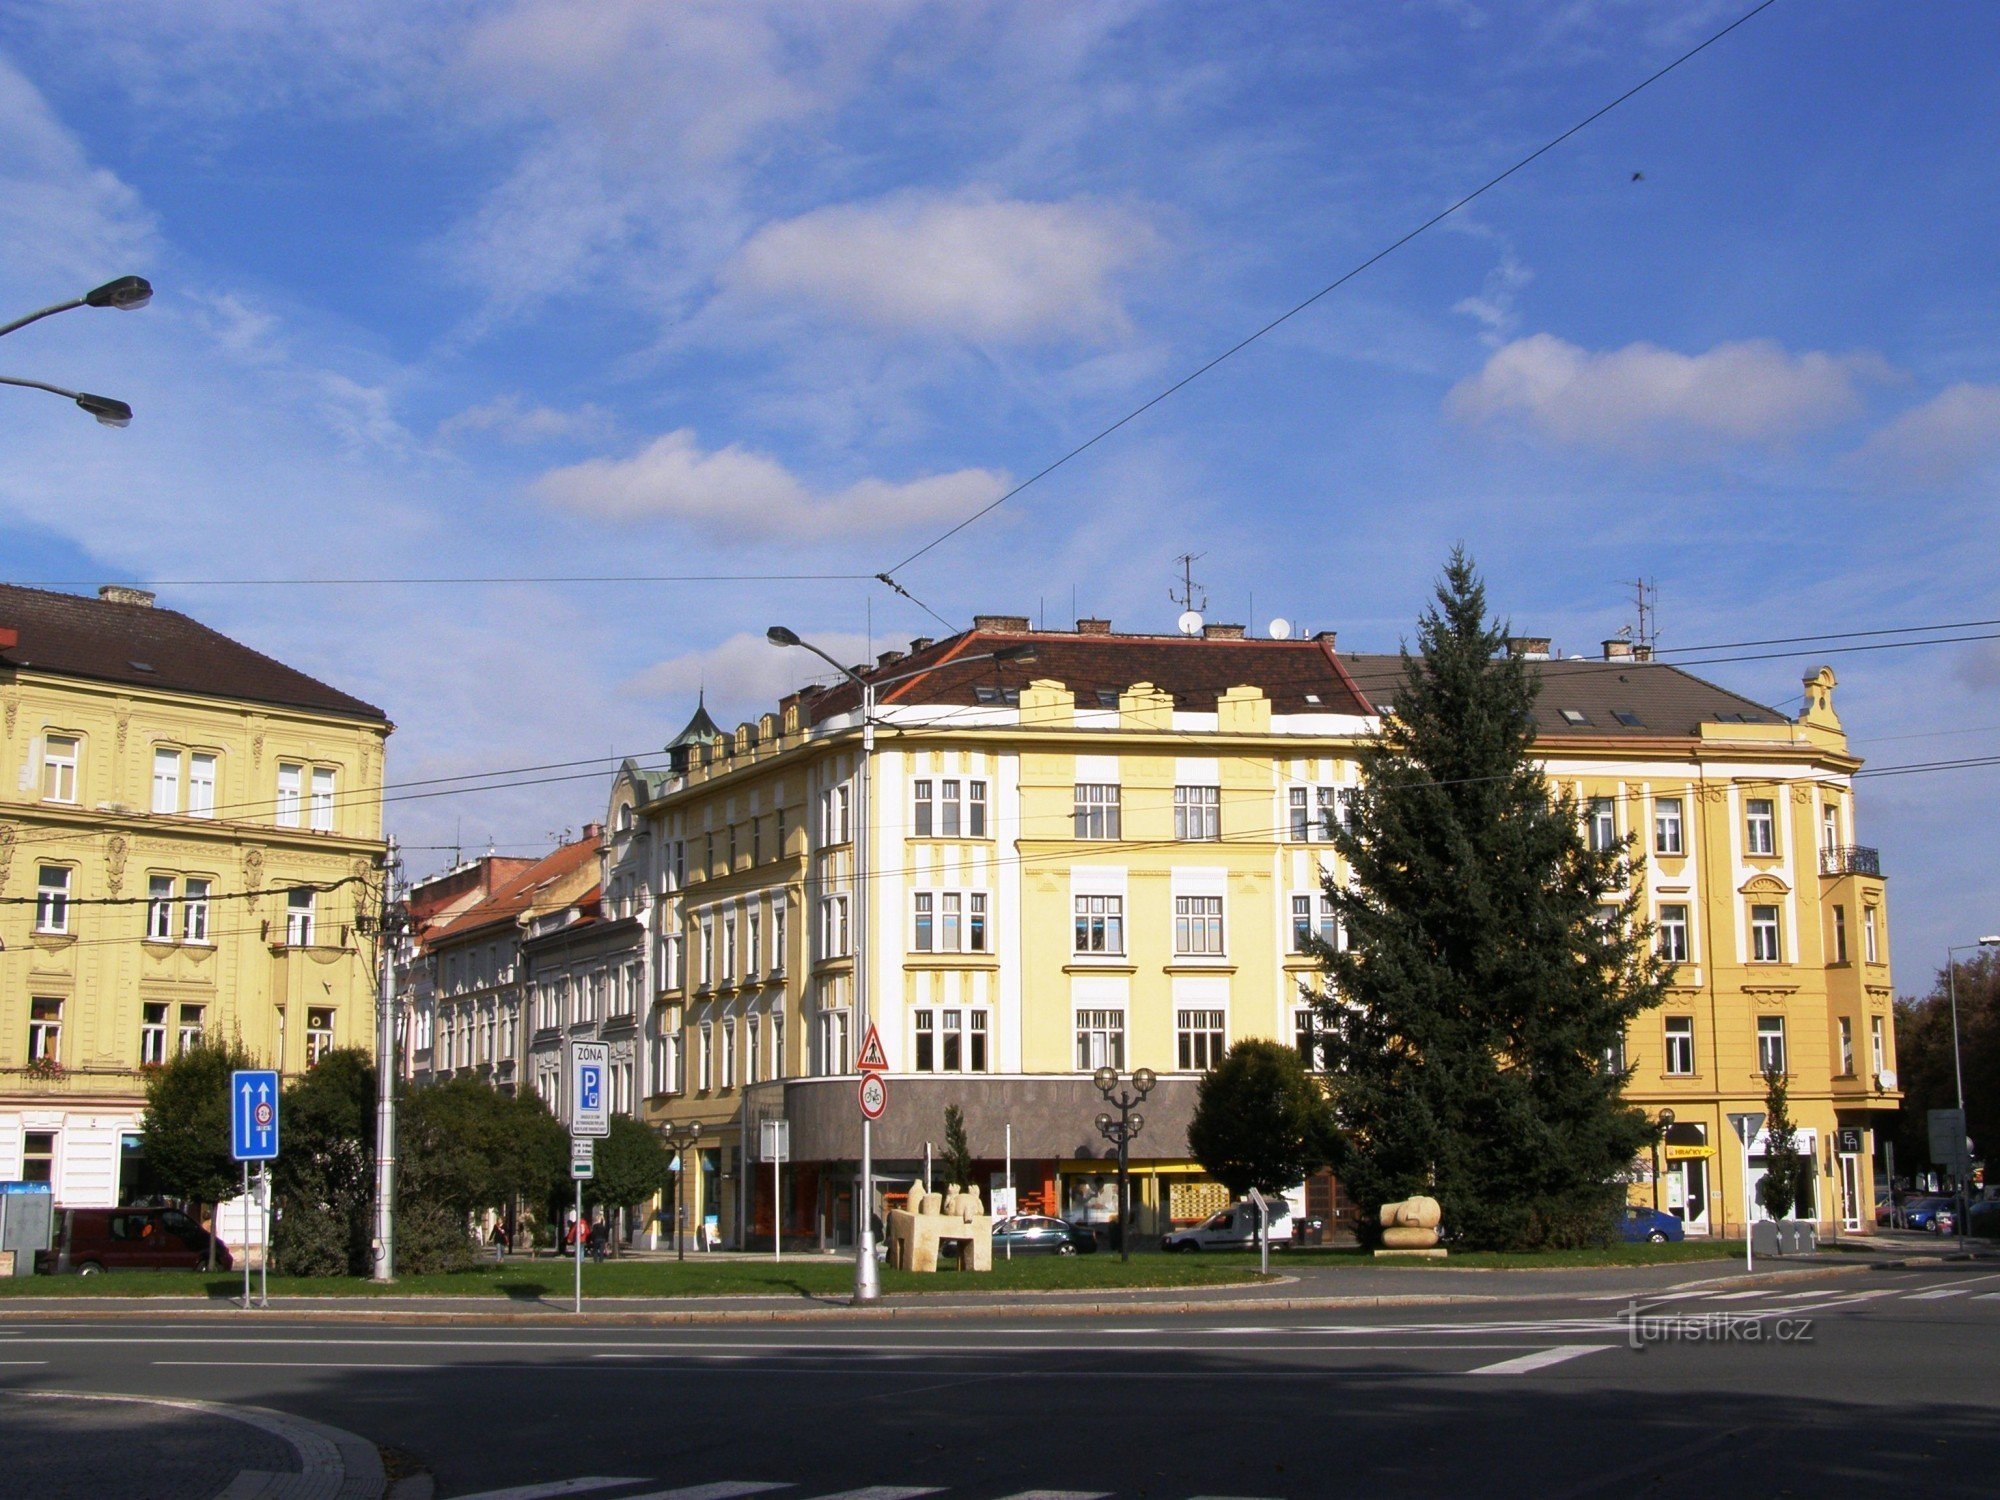 Hradec Králové - Quảng trường Tự do